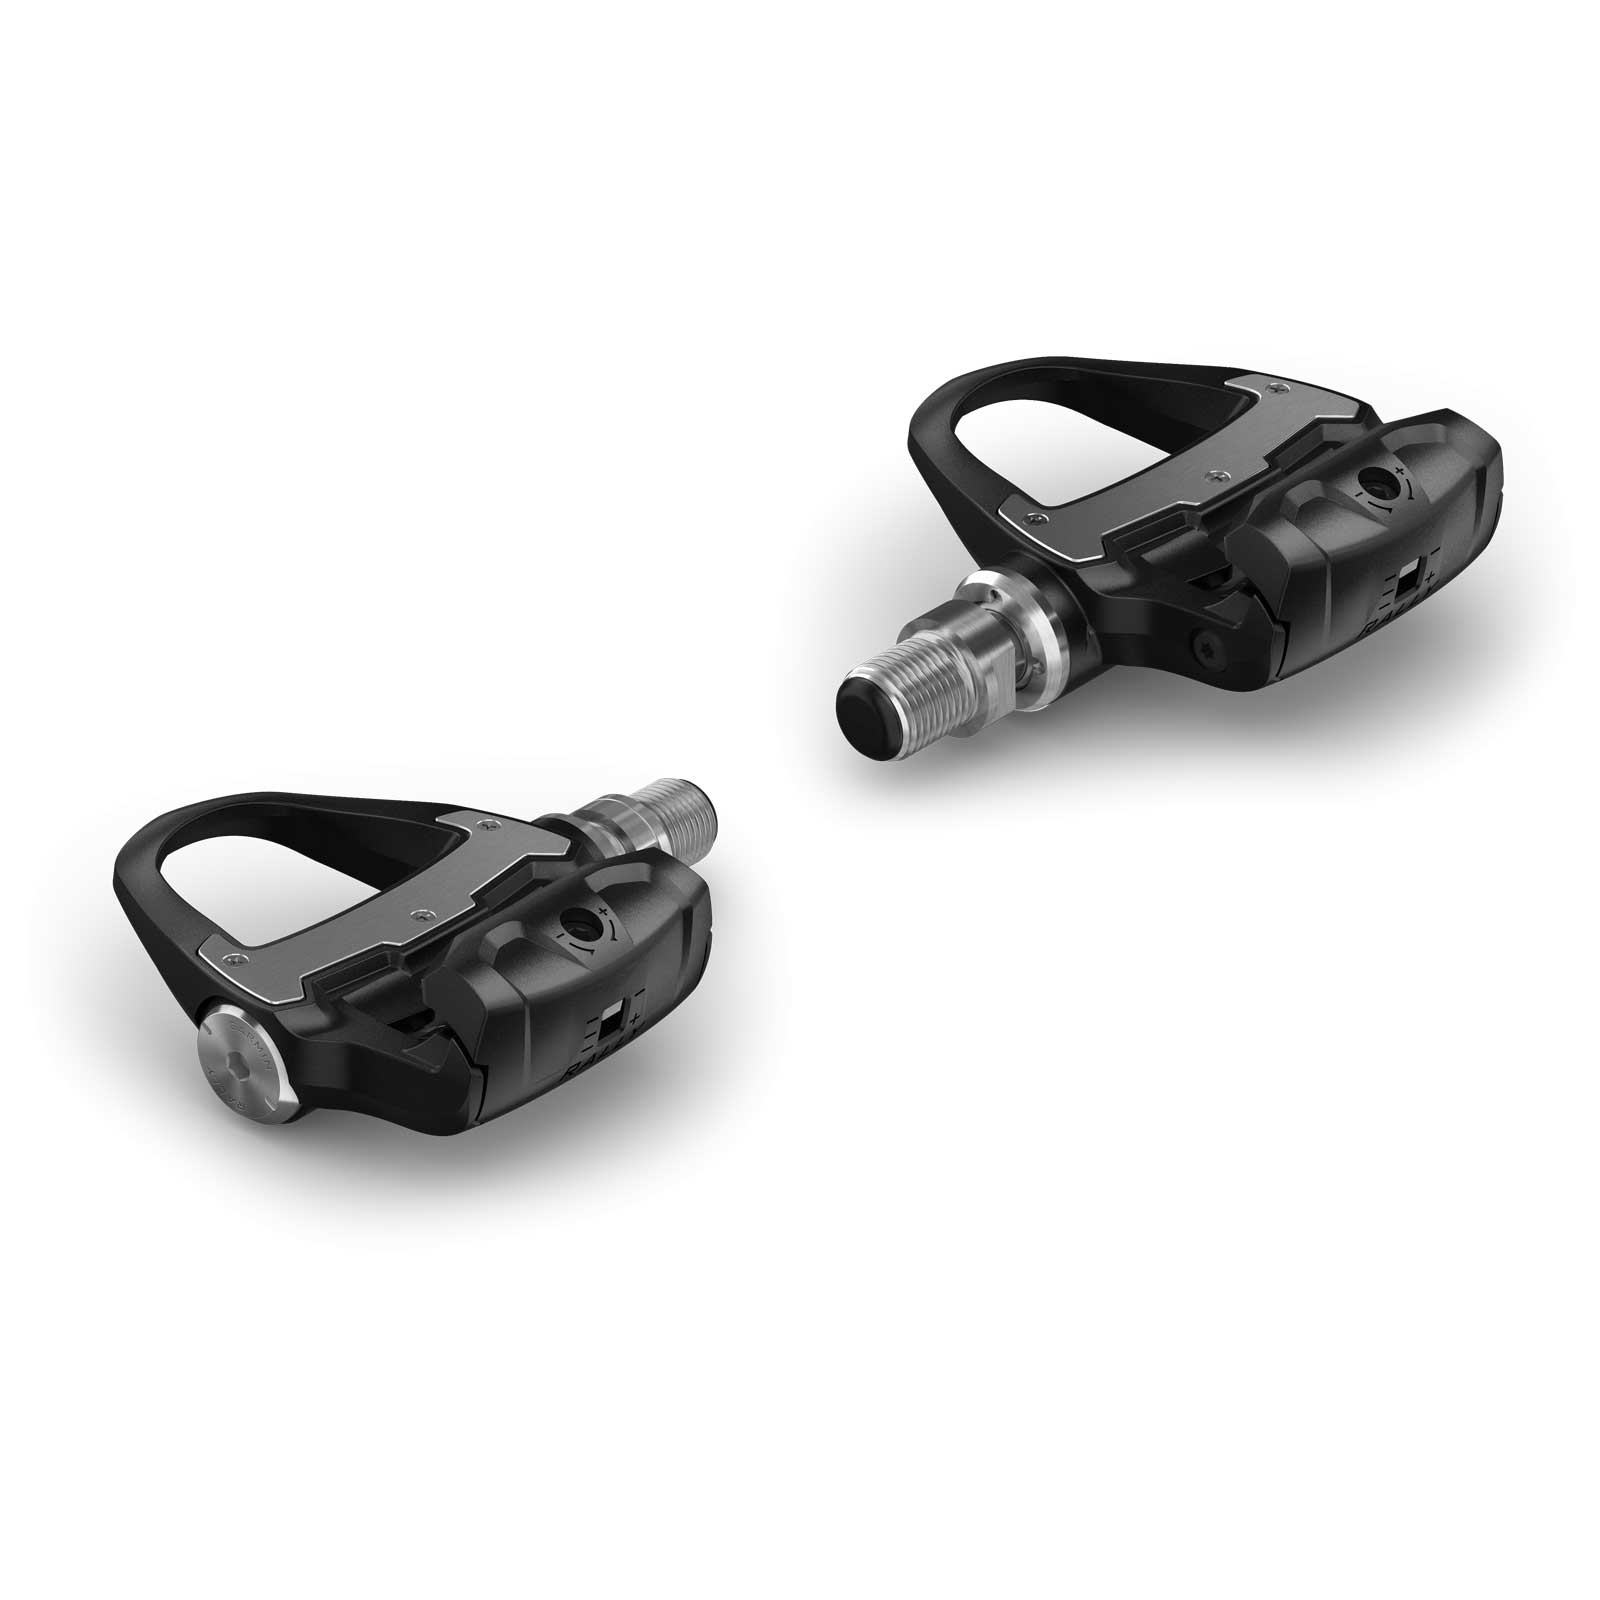 Image of Garmin Rally RS100 Pedal-Based Single-Sensing Power Meter - black